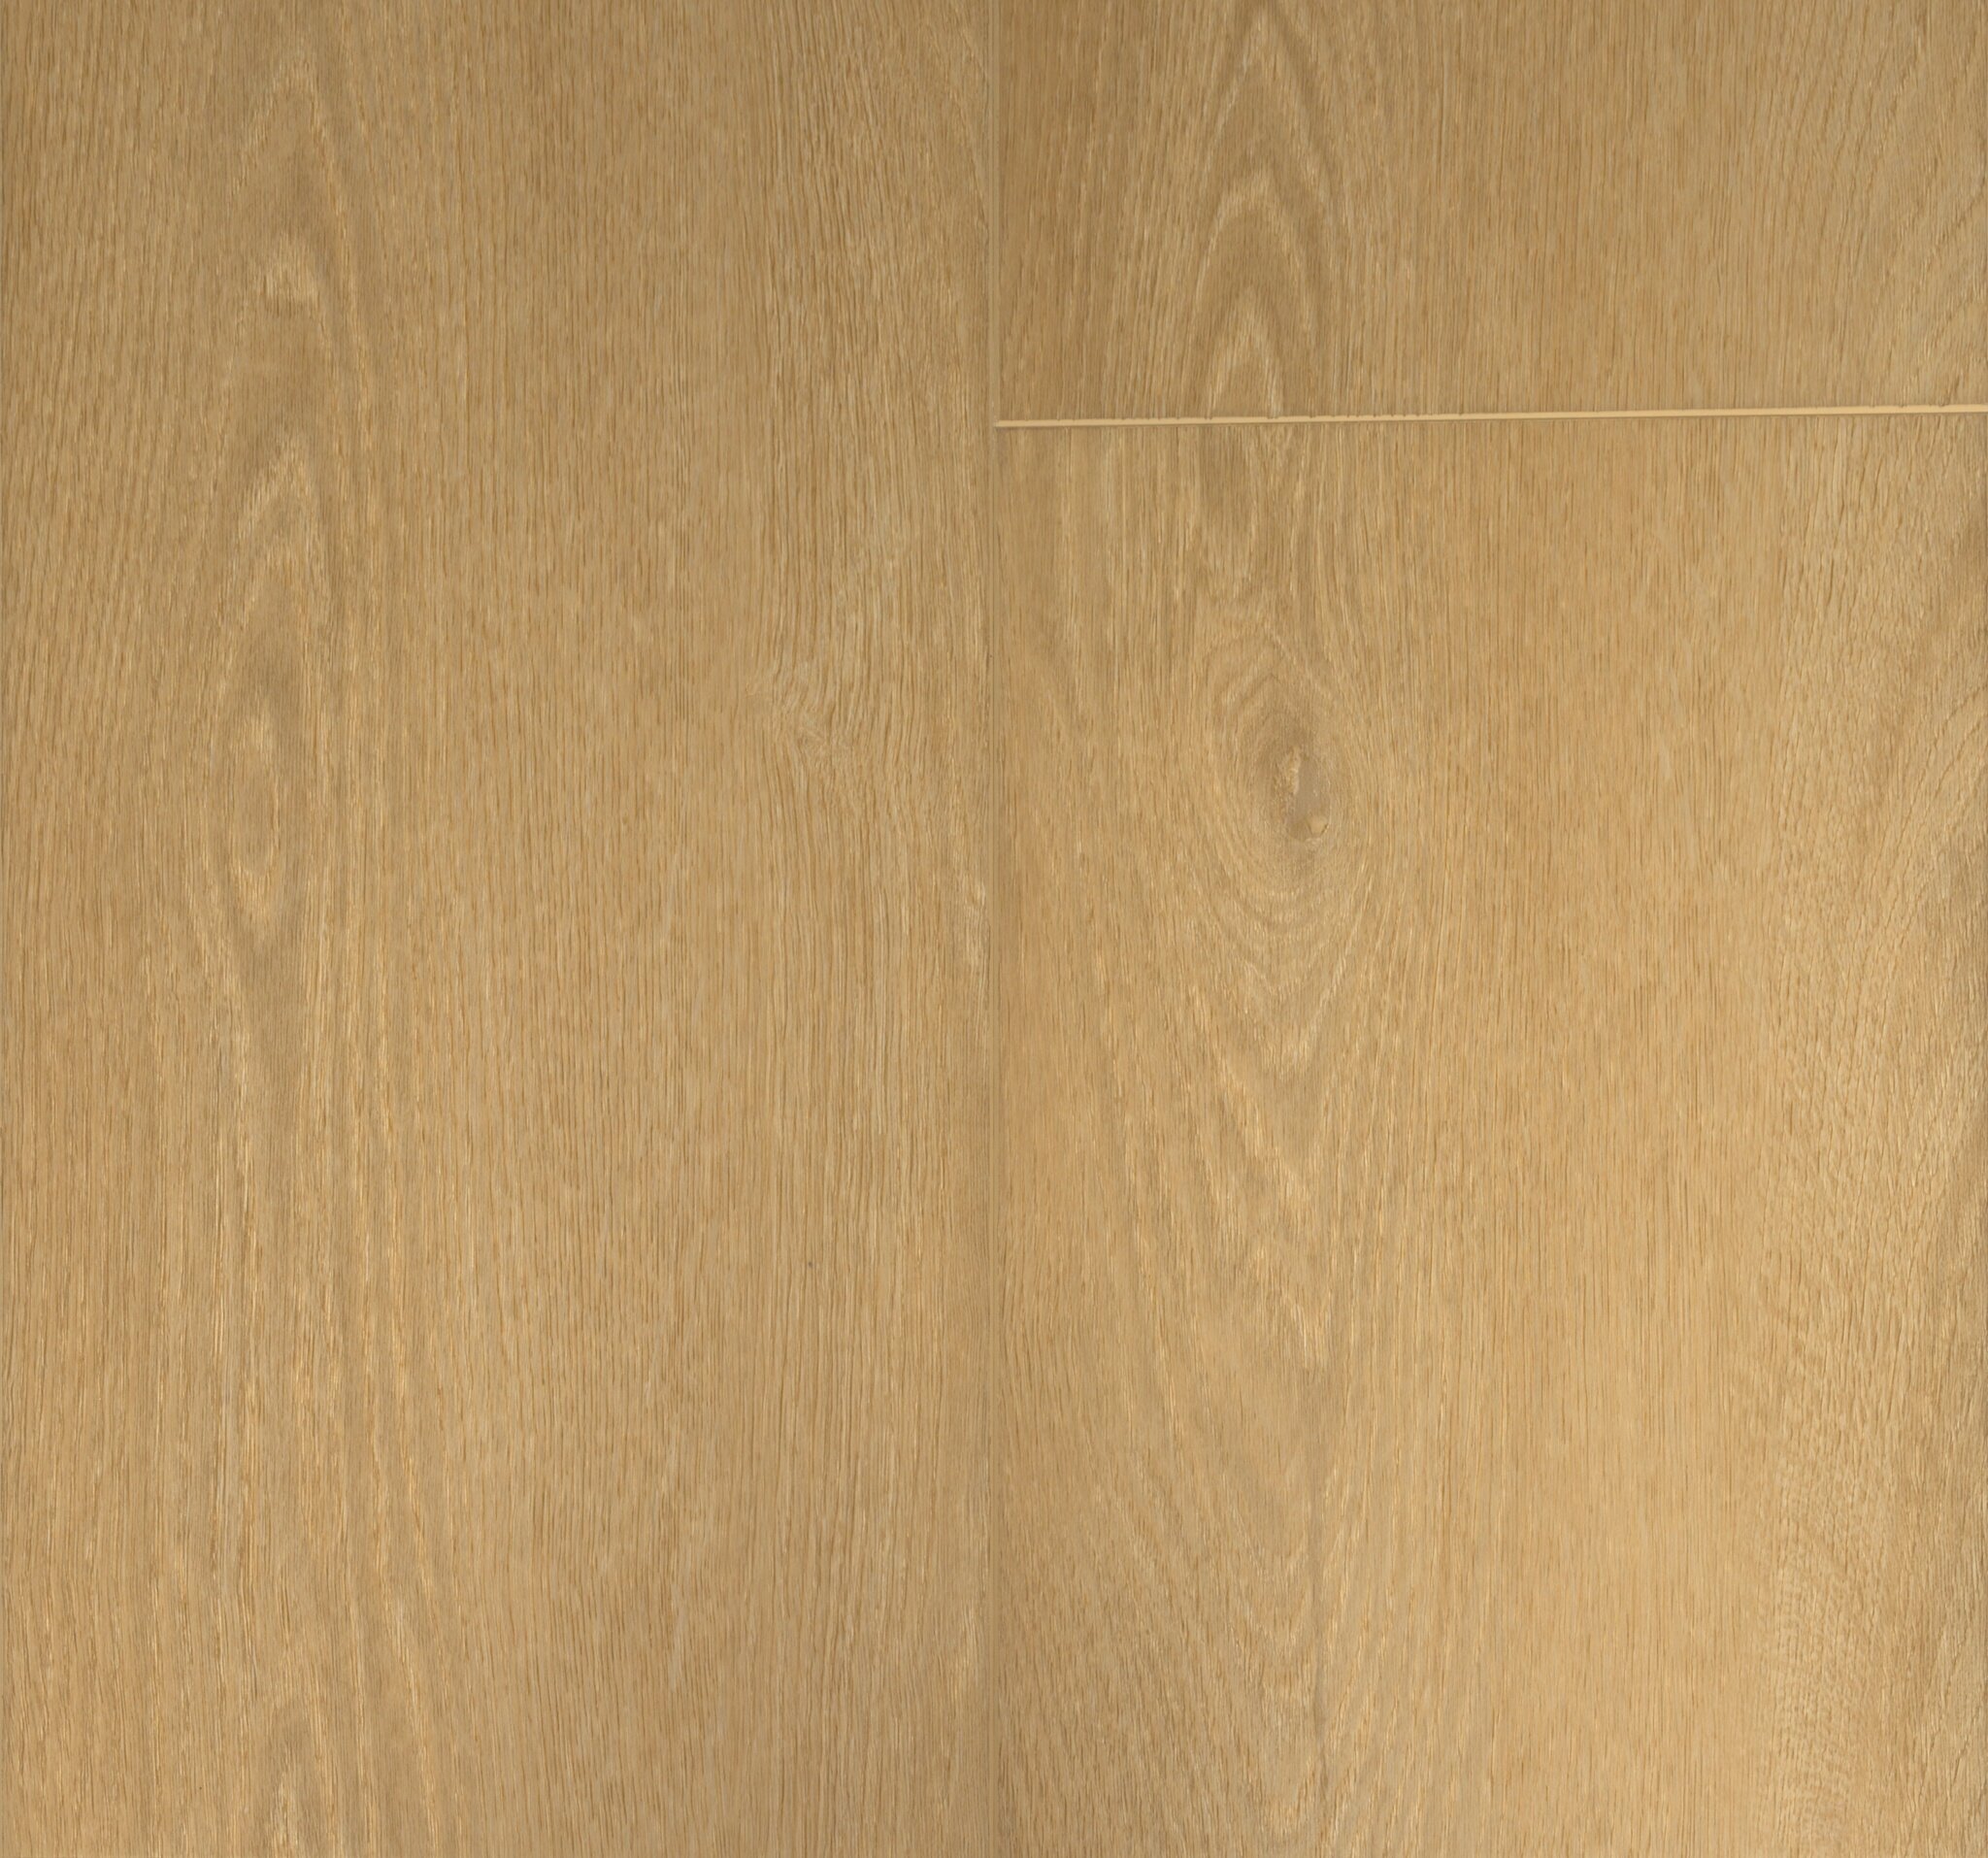 Oak Natural Curate vinyl flooring.